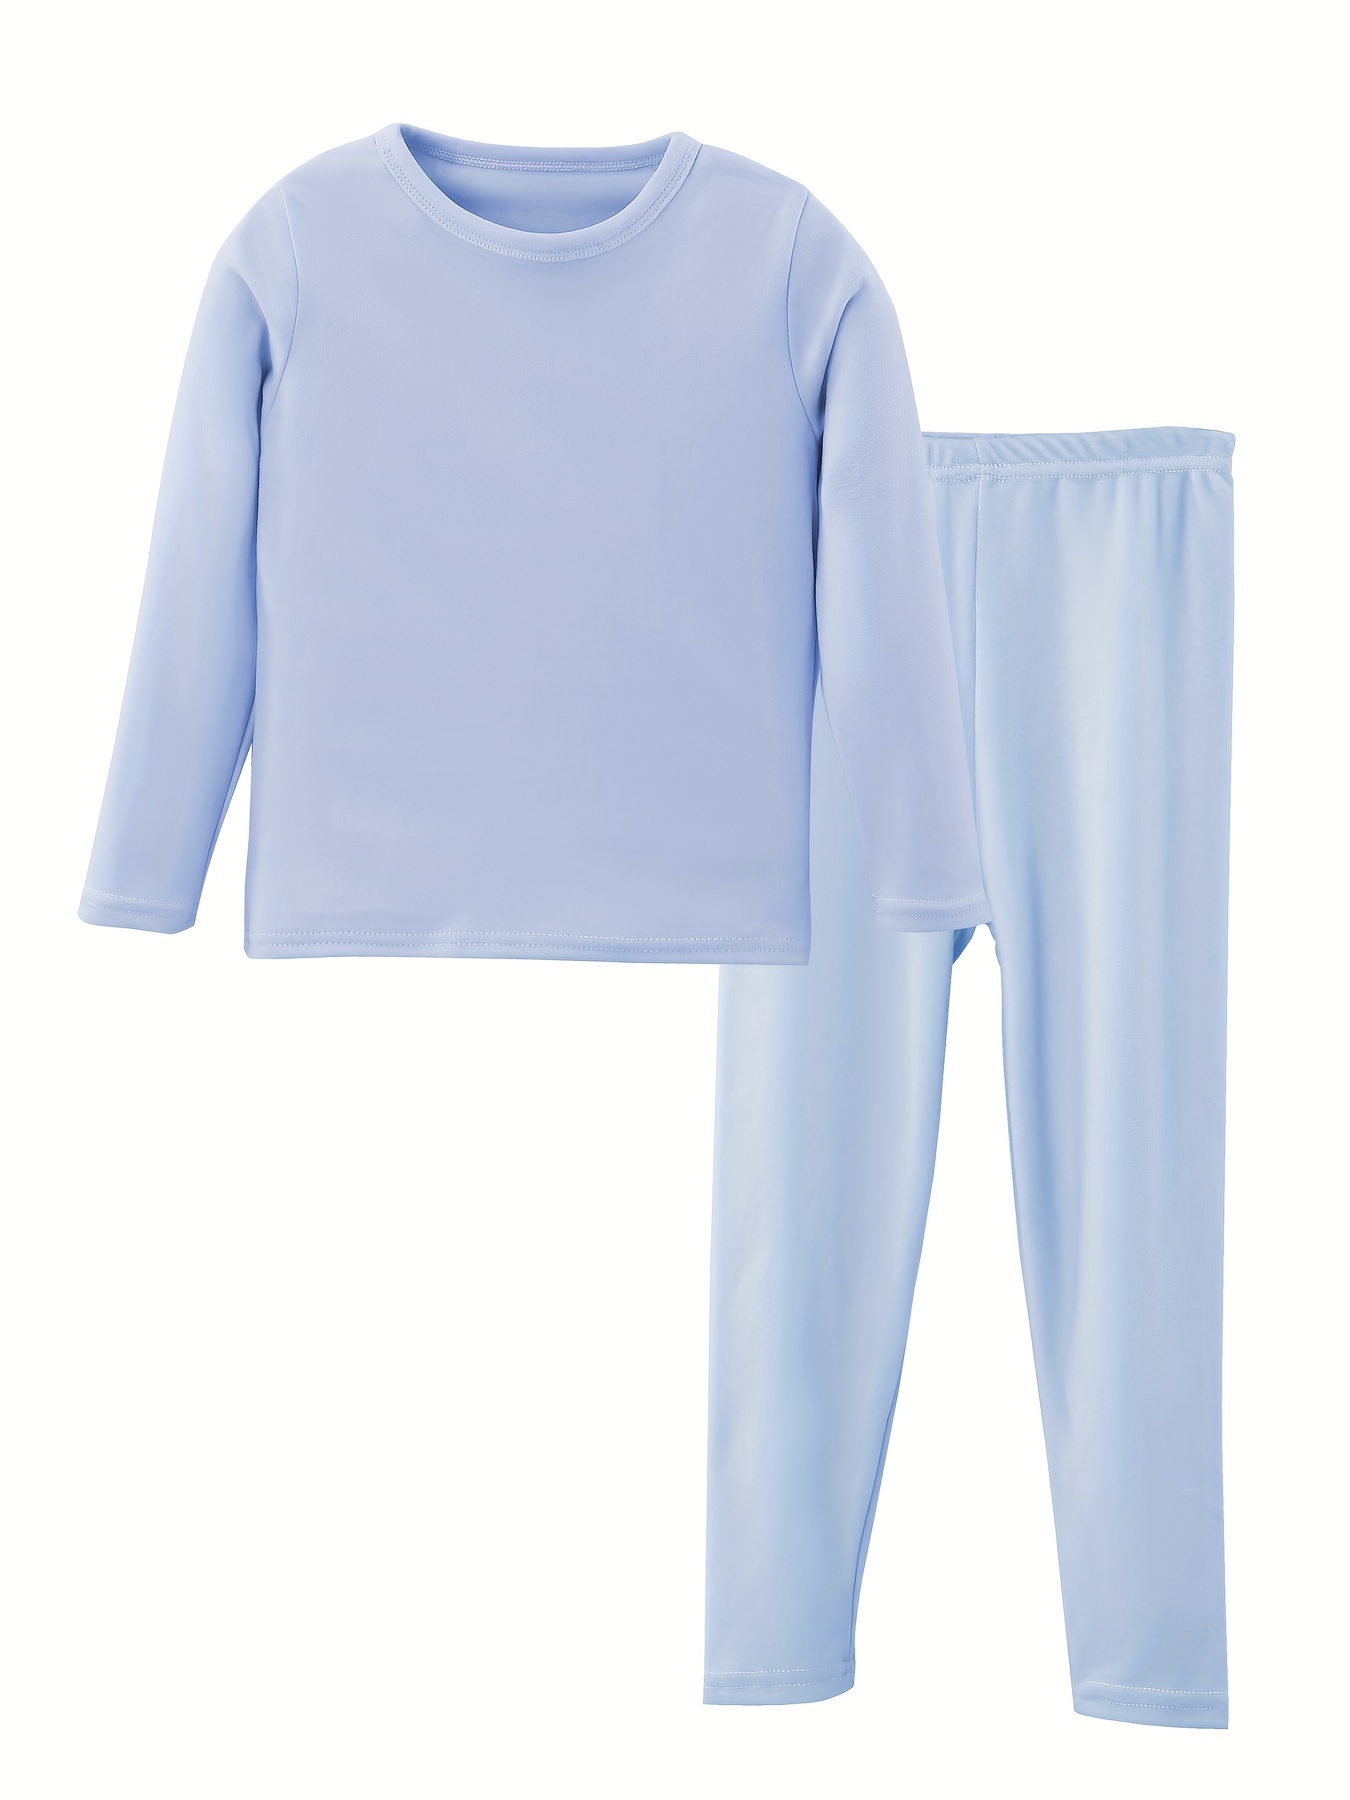 Girls Thermal Pajama Top and Pants